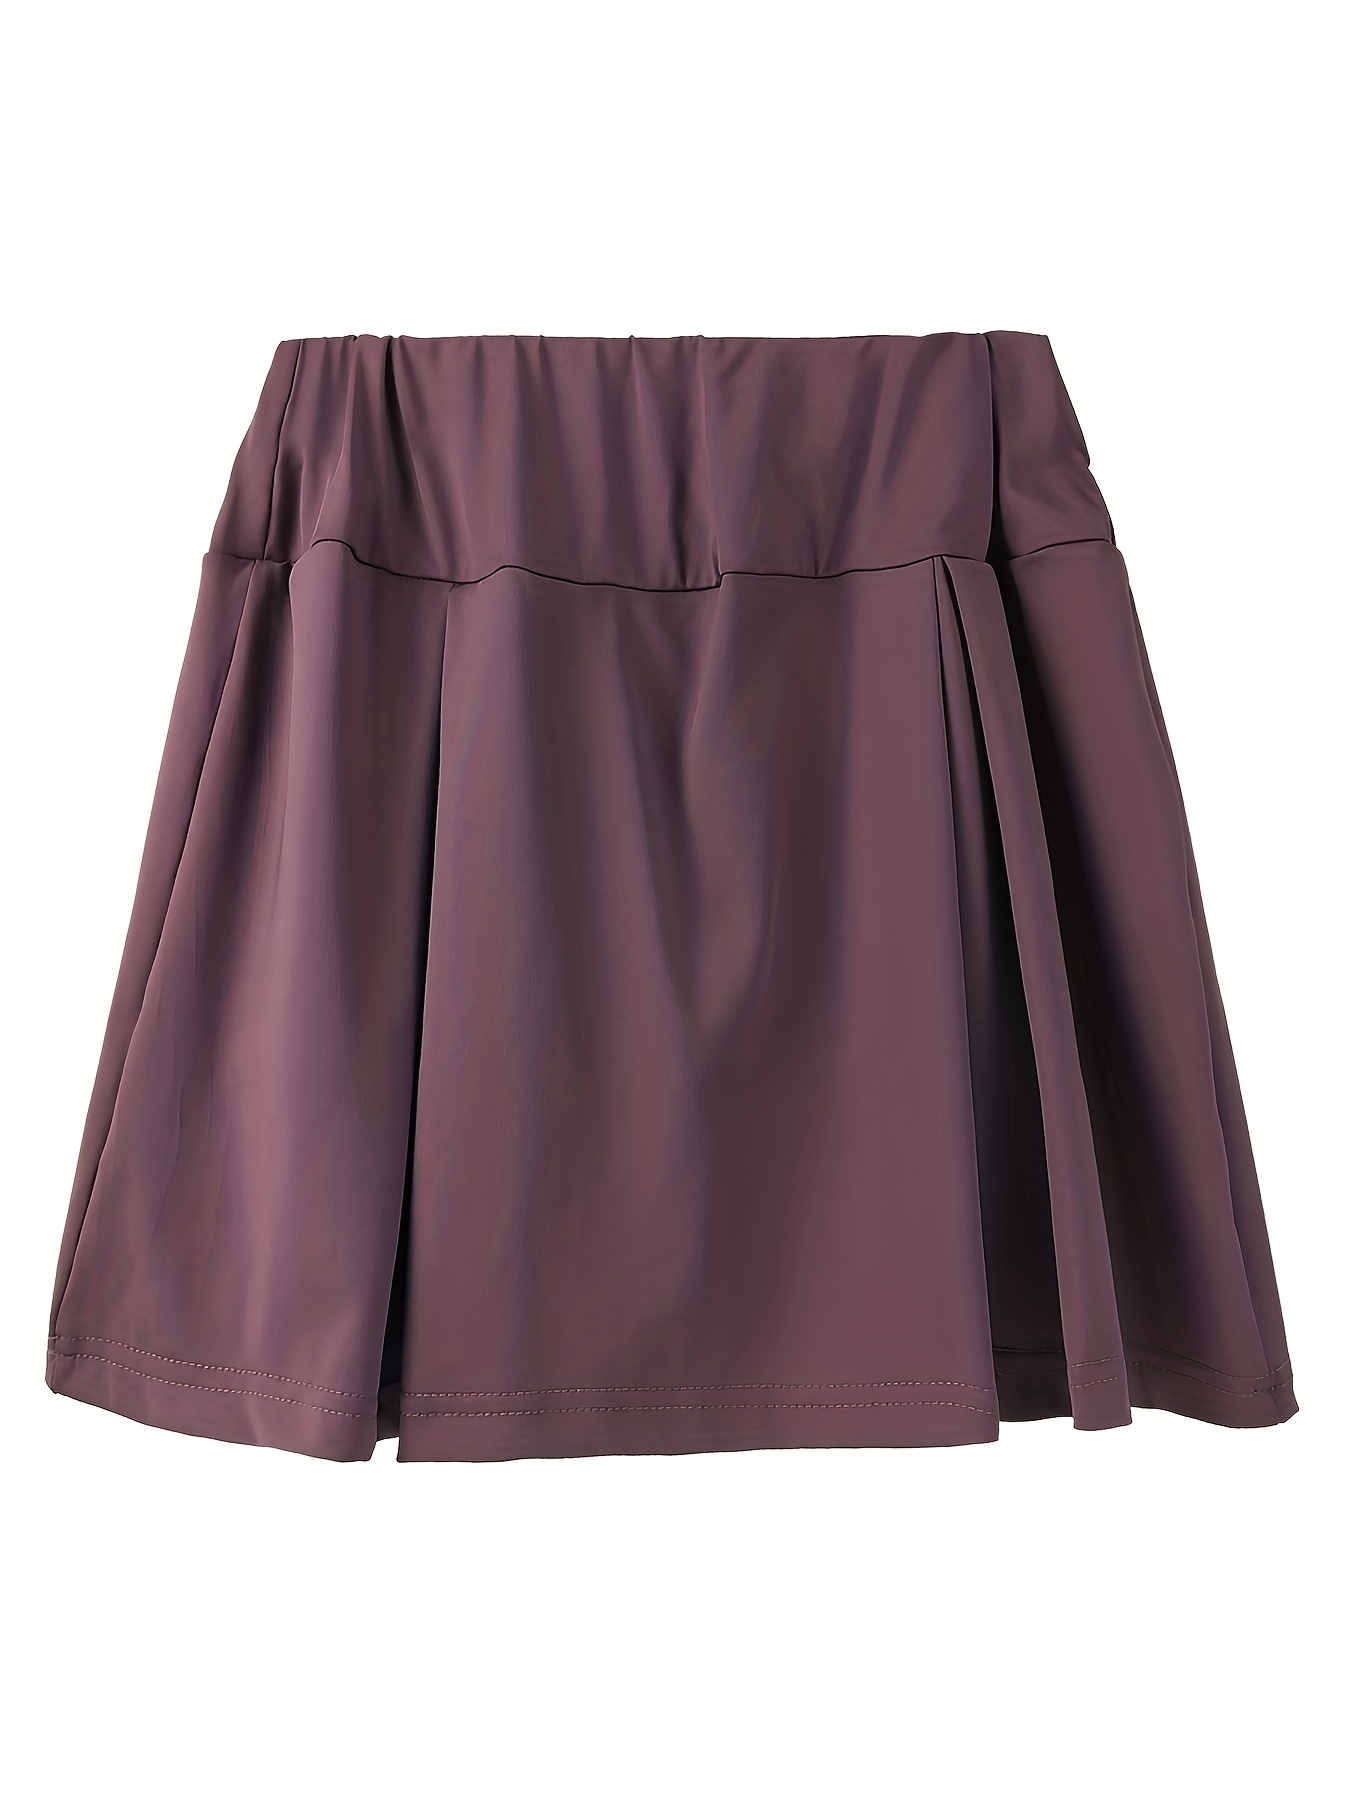 2pcs 2 in 1 sports short skirts for running golf tennis fashion elastic waist active skorts womens activewear details 14